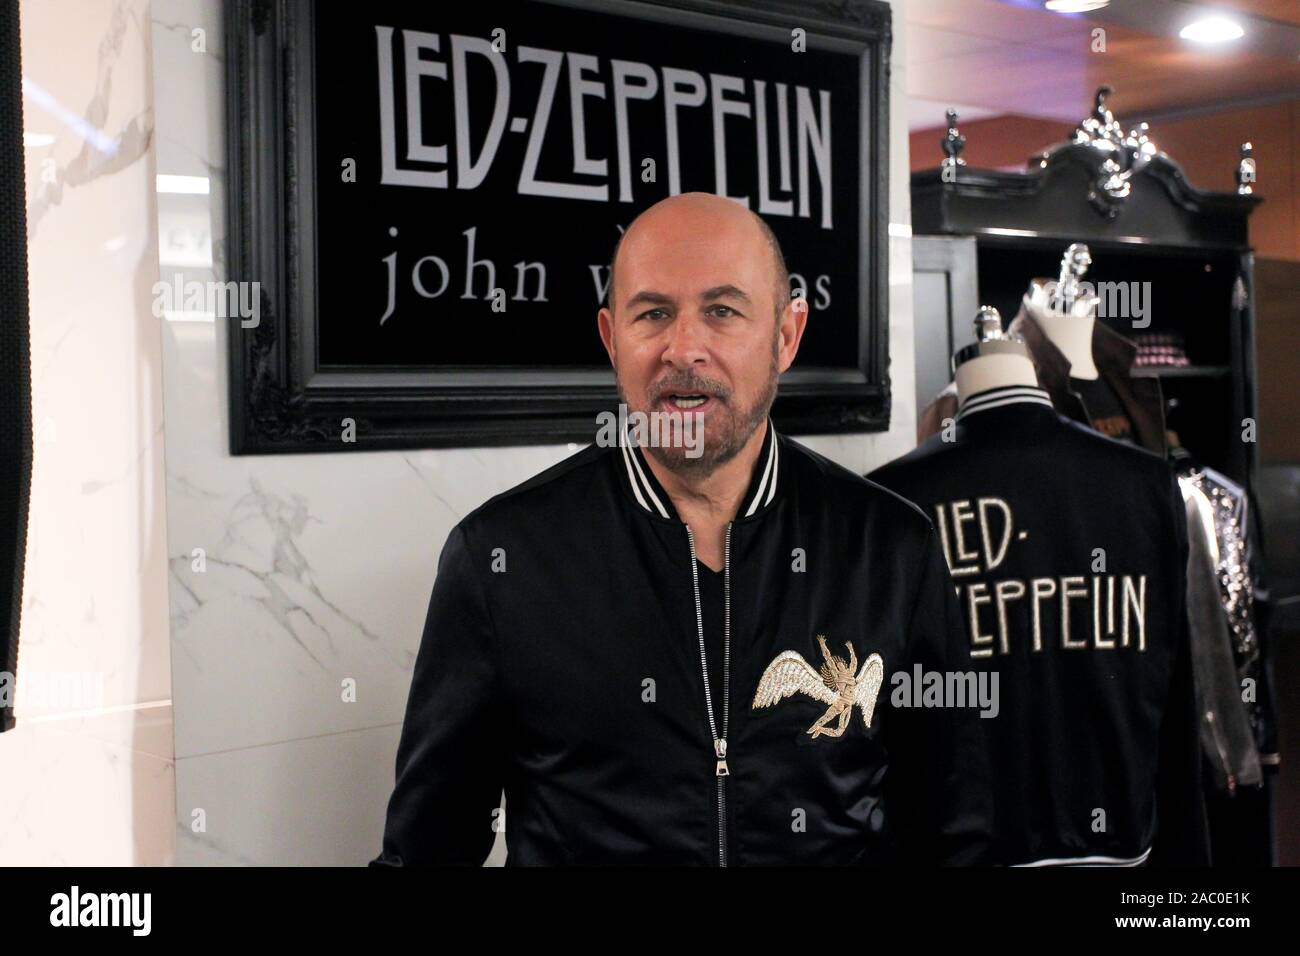 Fashion designer JOHN VARVATOS presents his new collection "JOHN VARVATOS X  LED ZEPPELIN" in Athens Stock Photo - Alamy